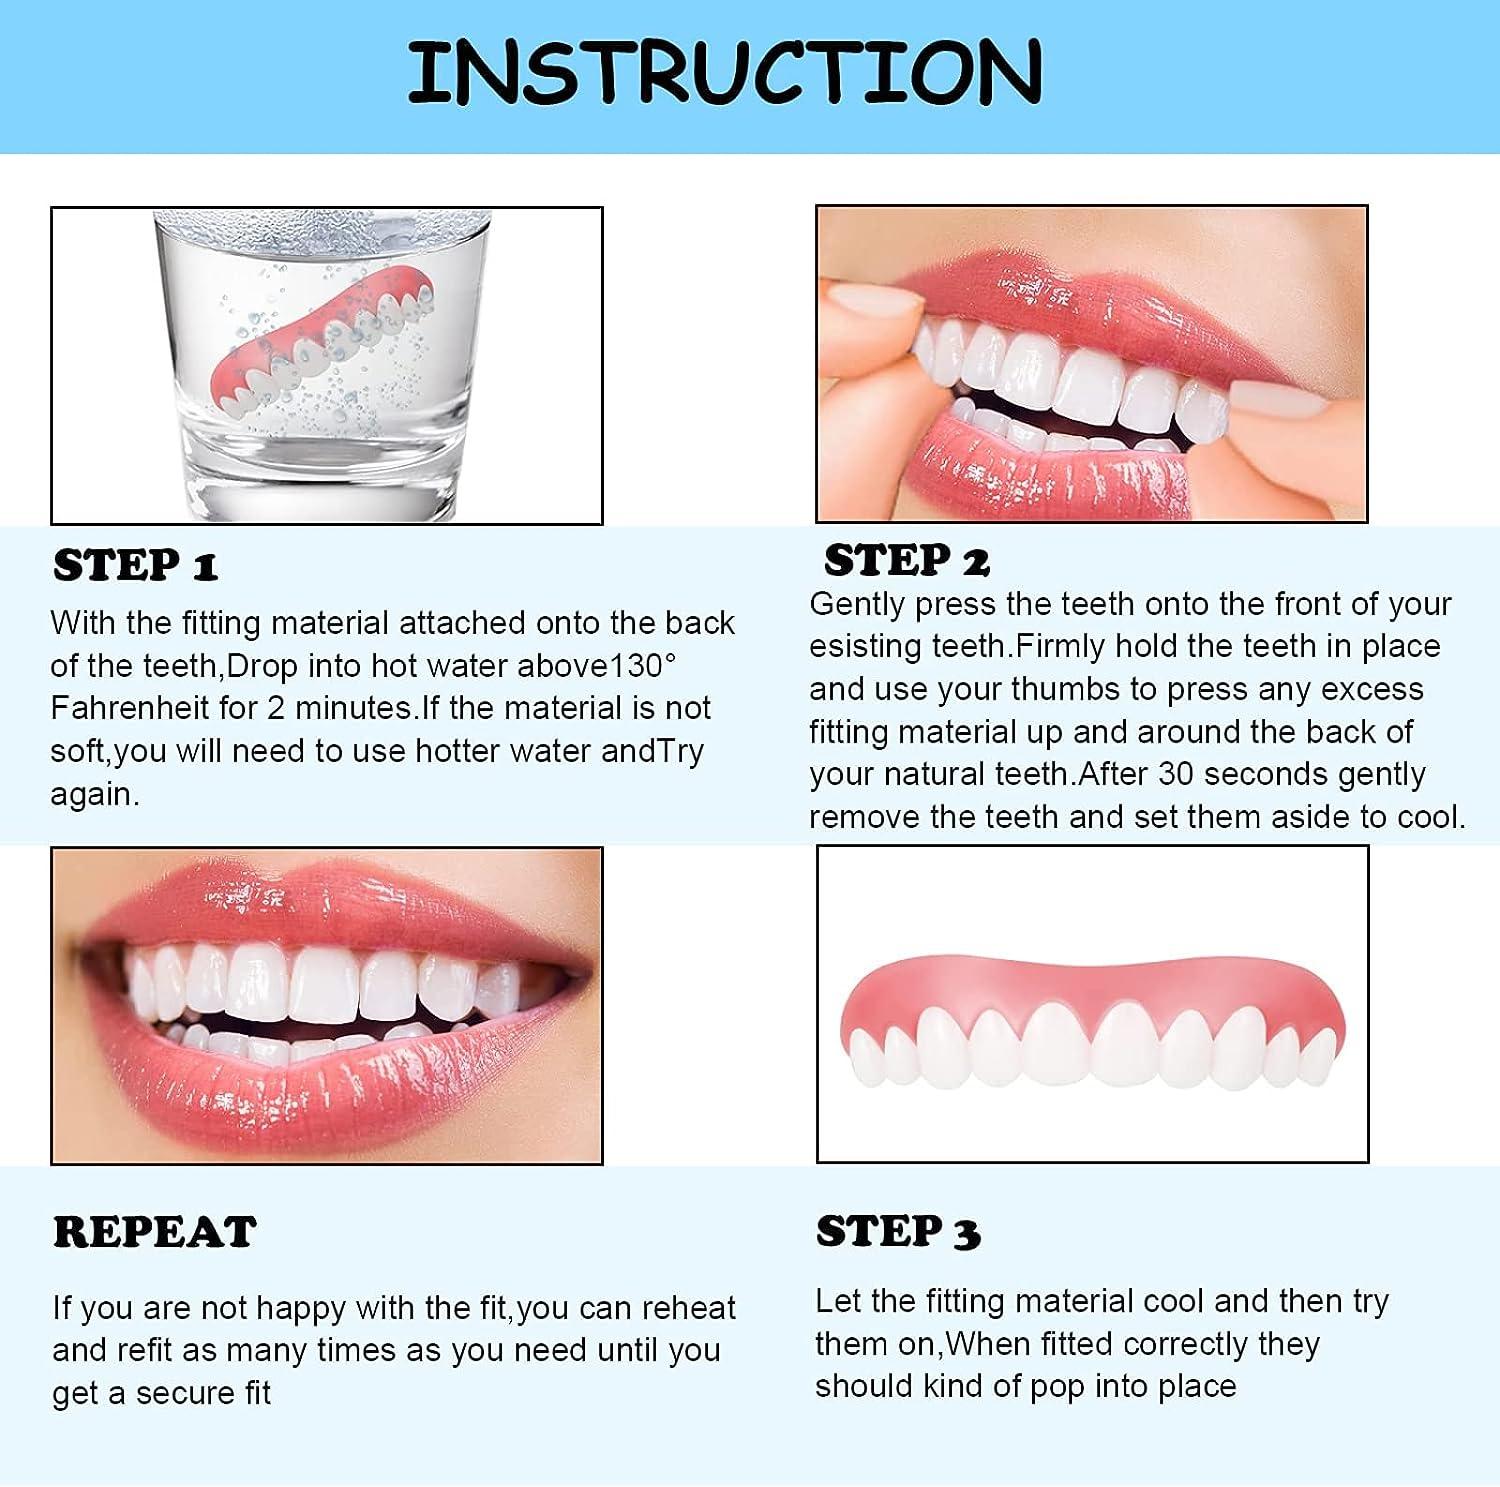 At Home Dental Molding Kit And Instructions - Single Kit